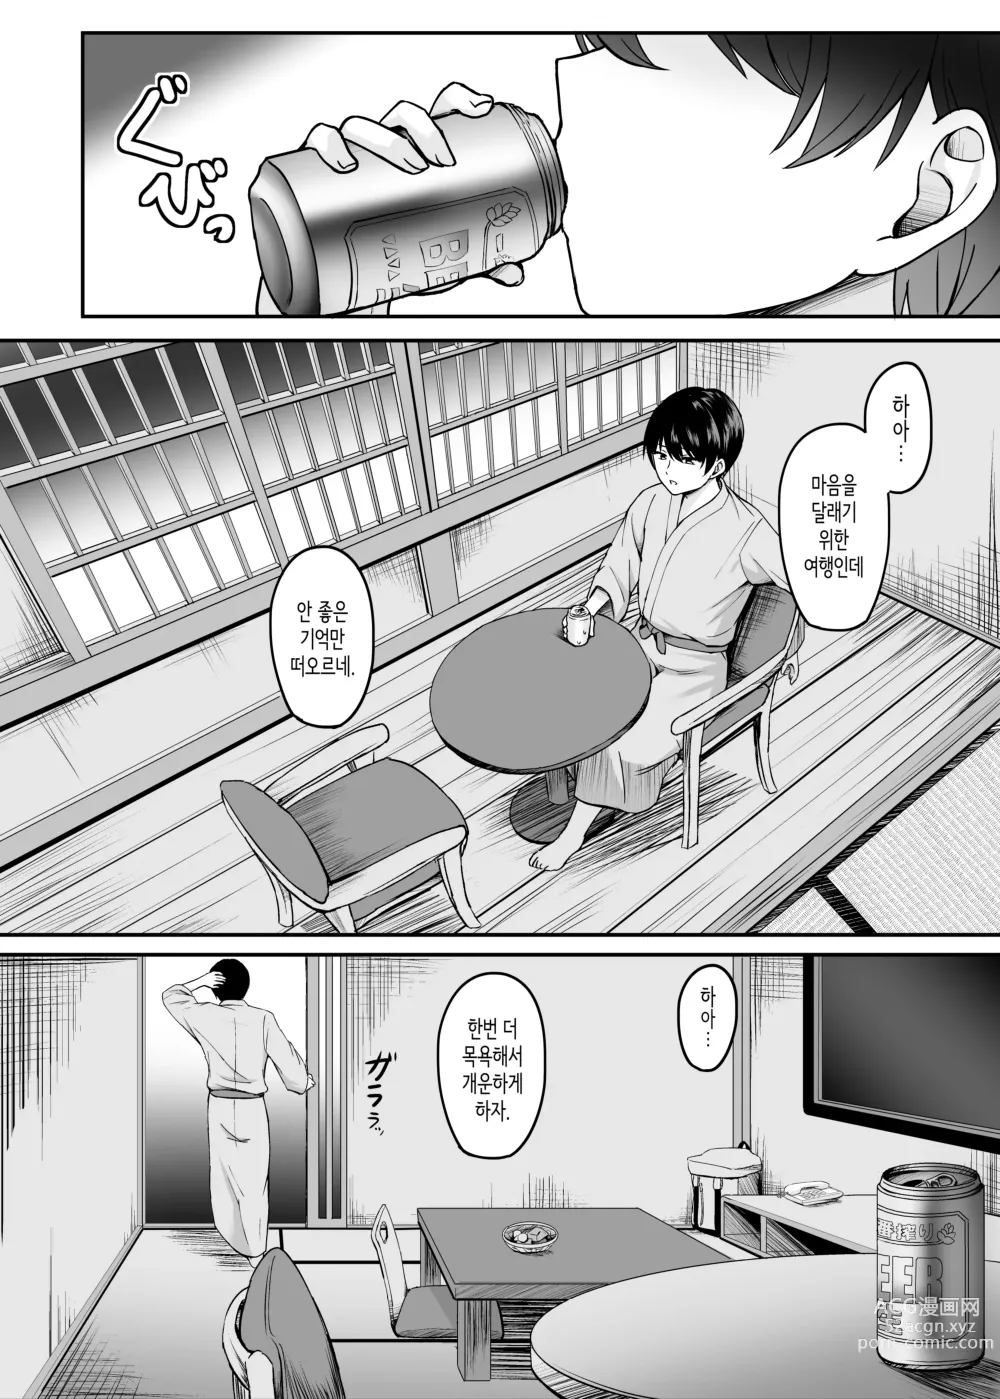 Page 5 of doujinshi 유부녀와 온천과.